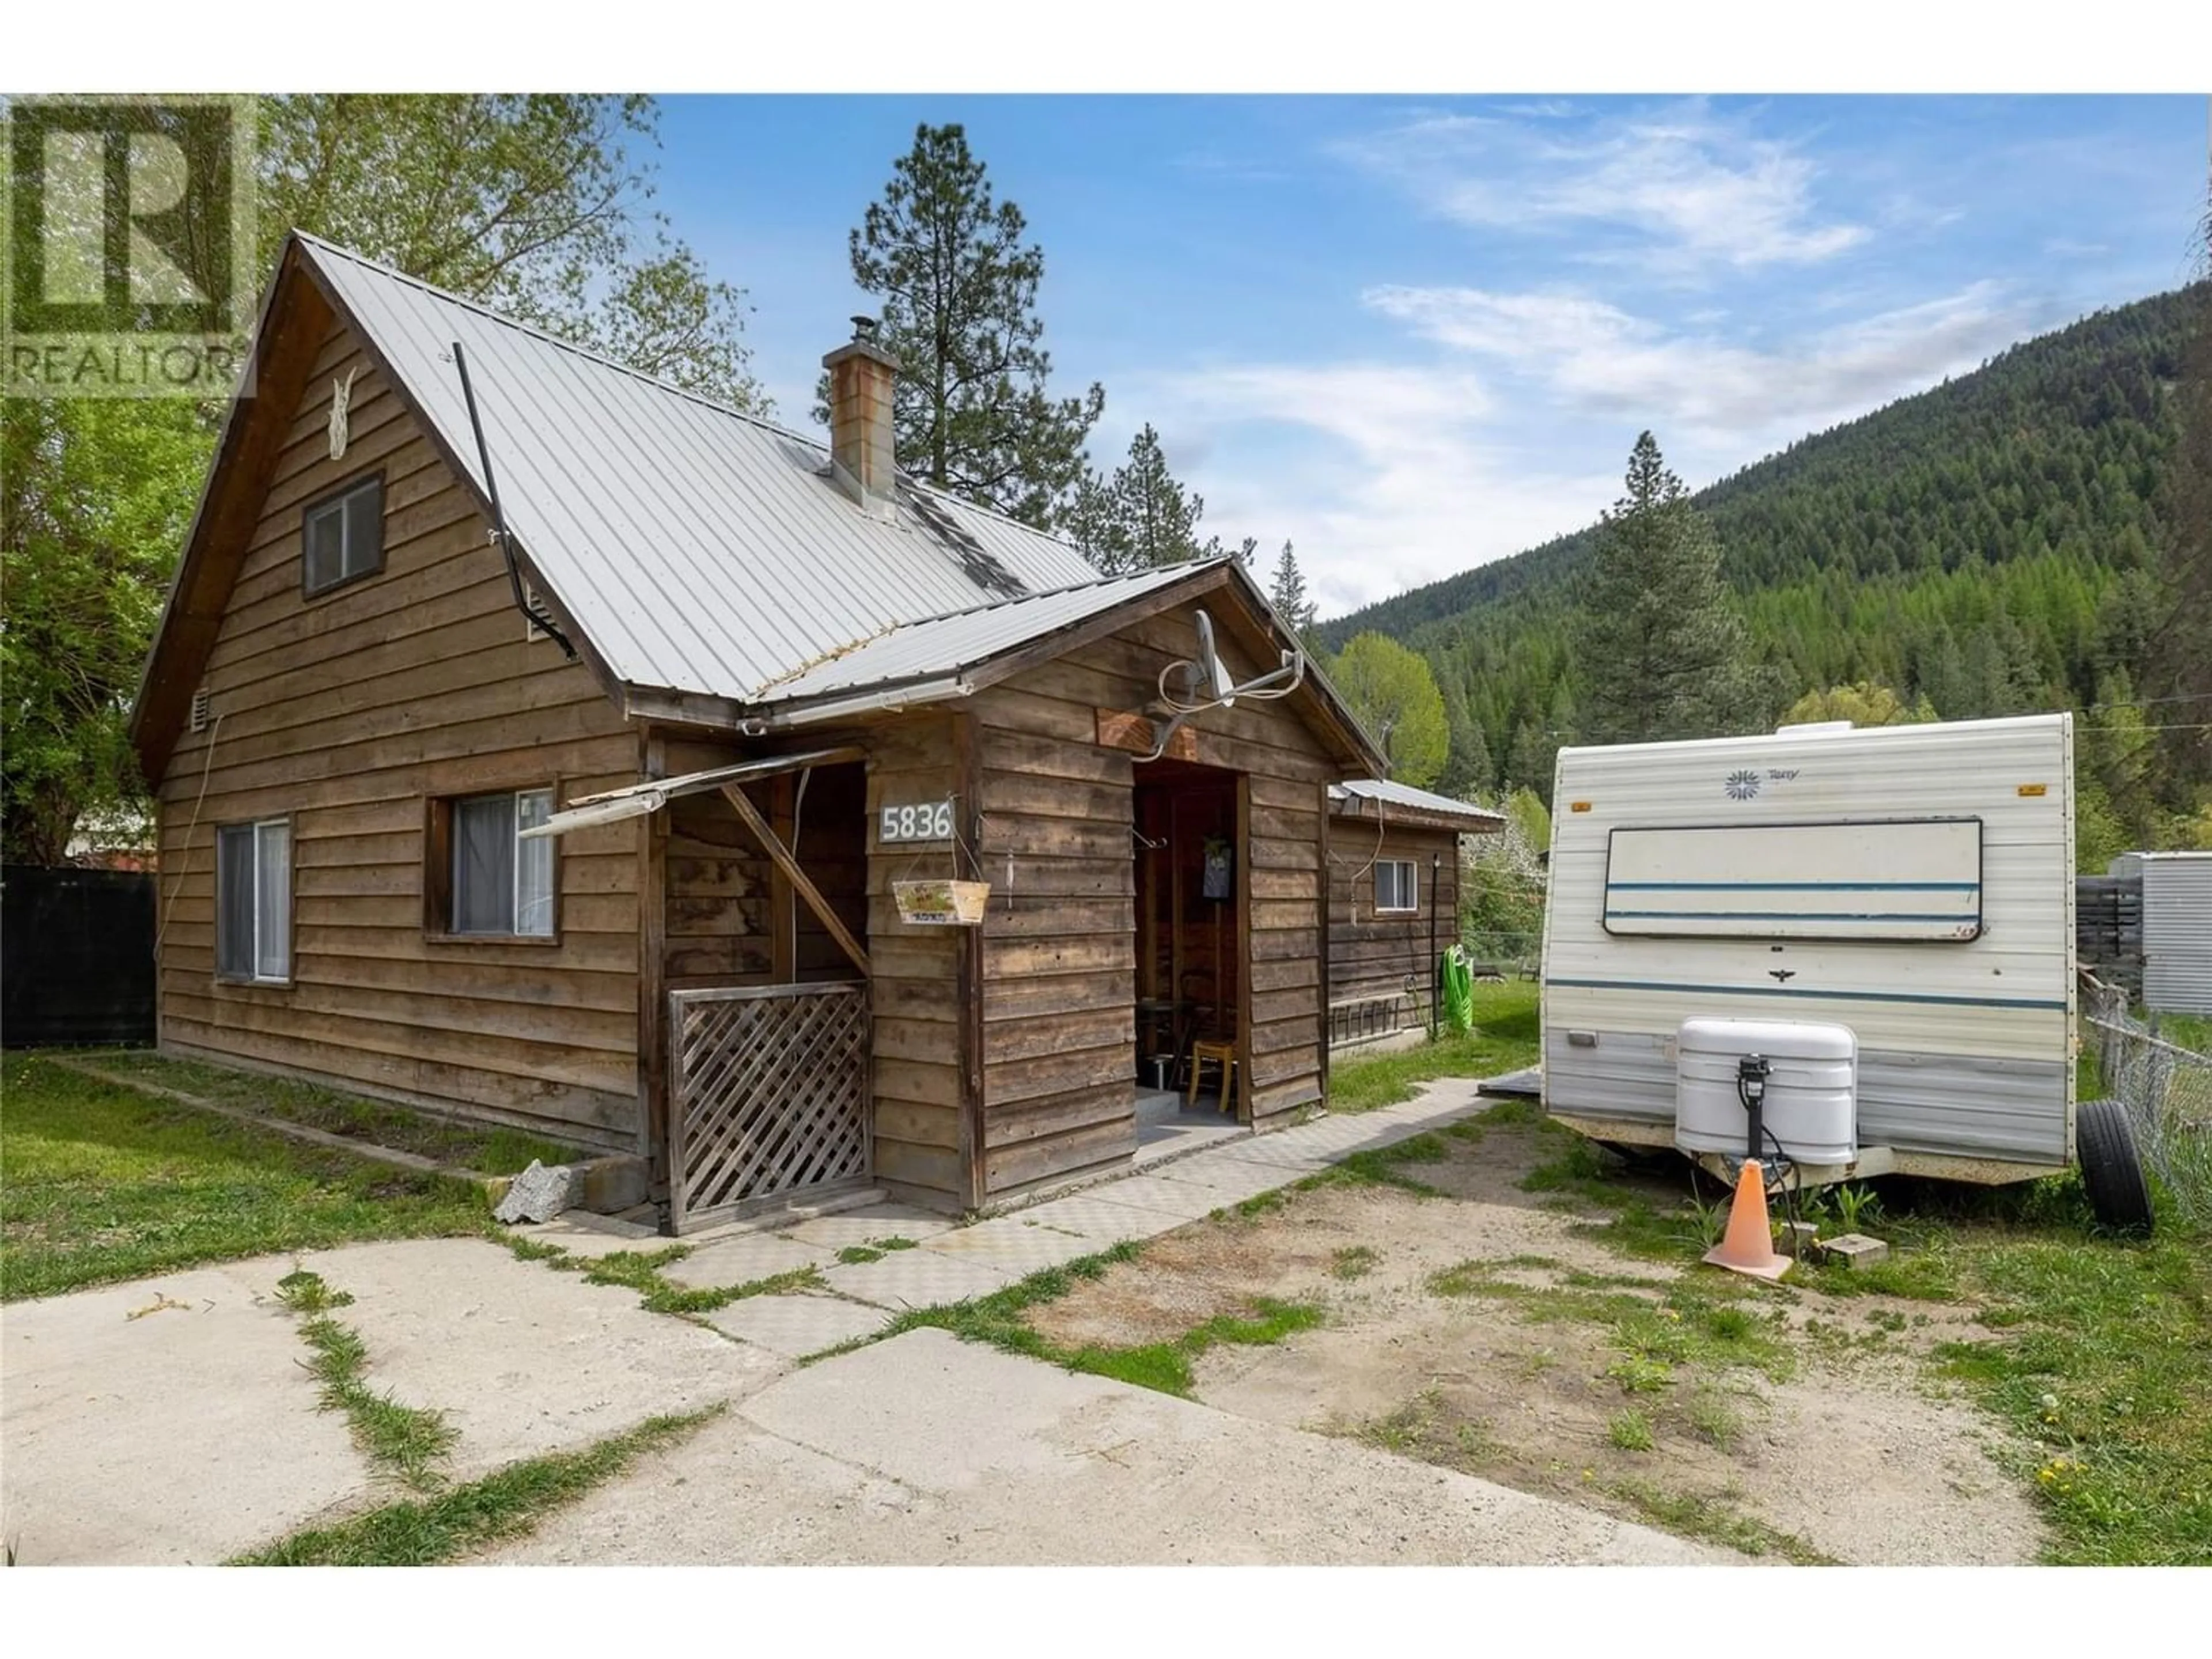 Cottage for 5836 33 Highway, Beaverdell British Columbia V0H1A0